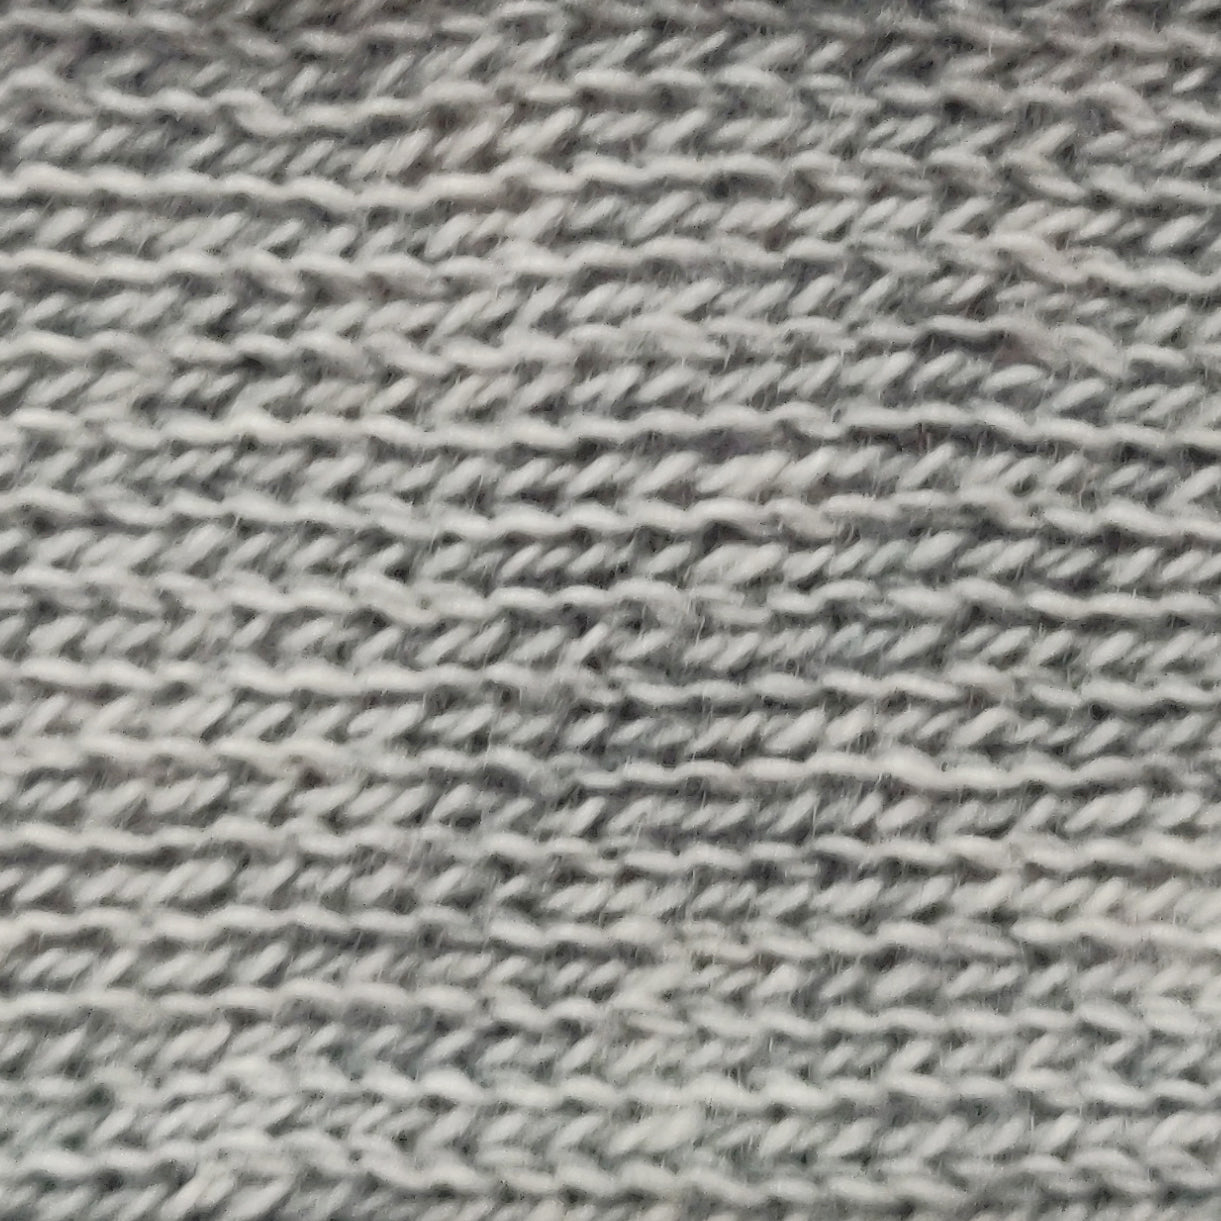 2645| Cotton Sweater